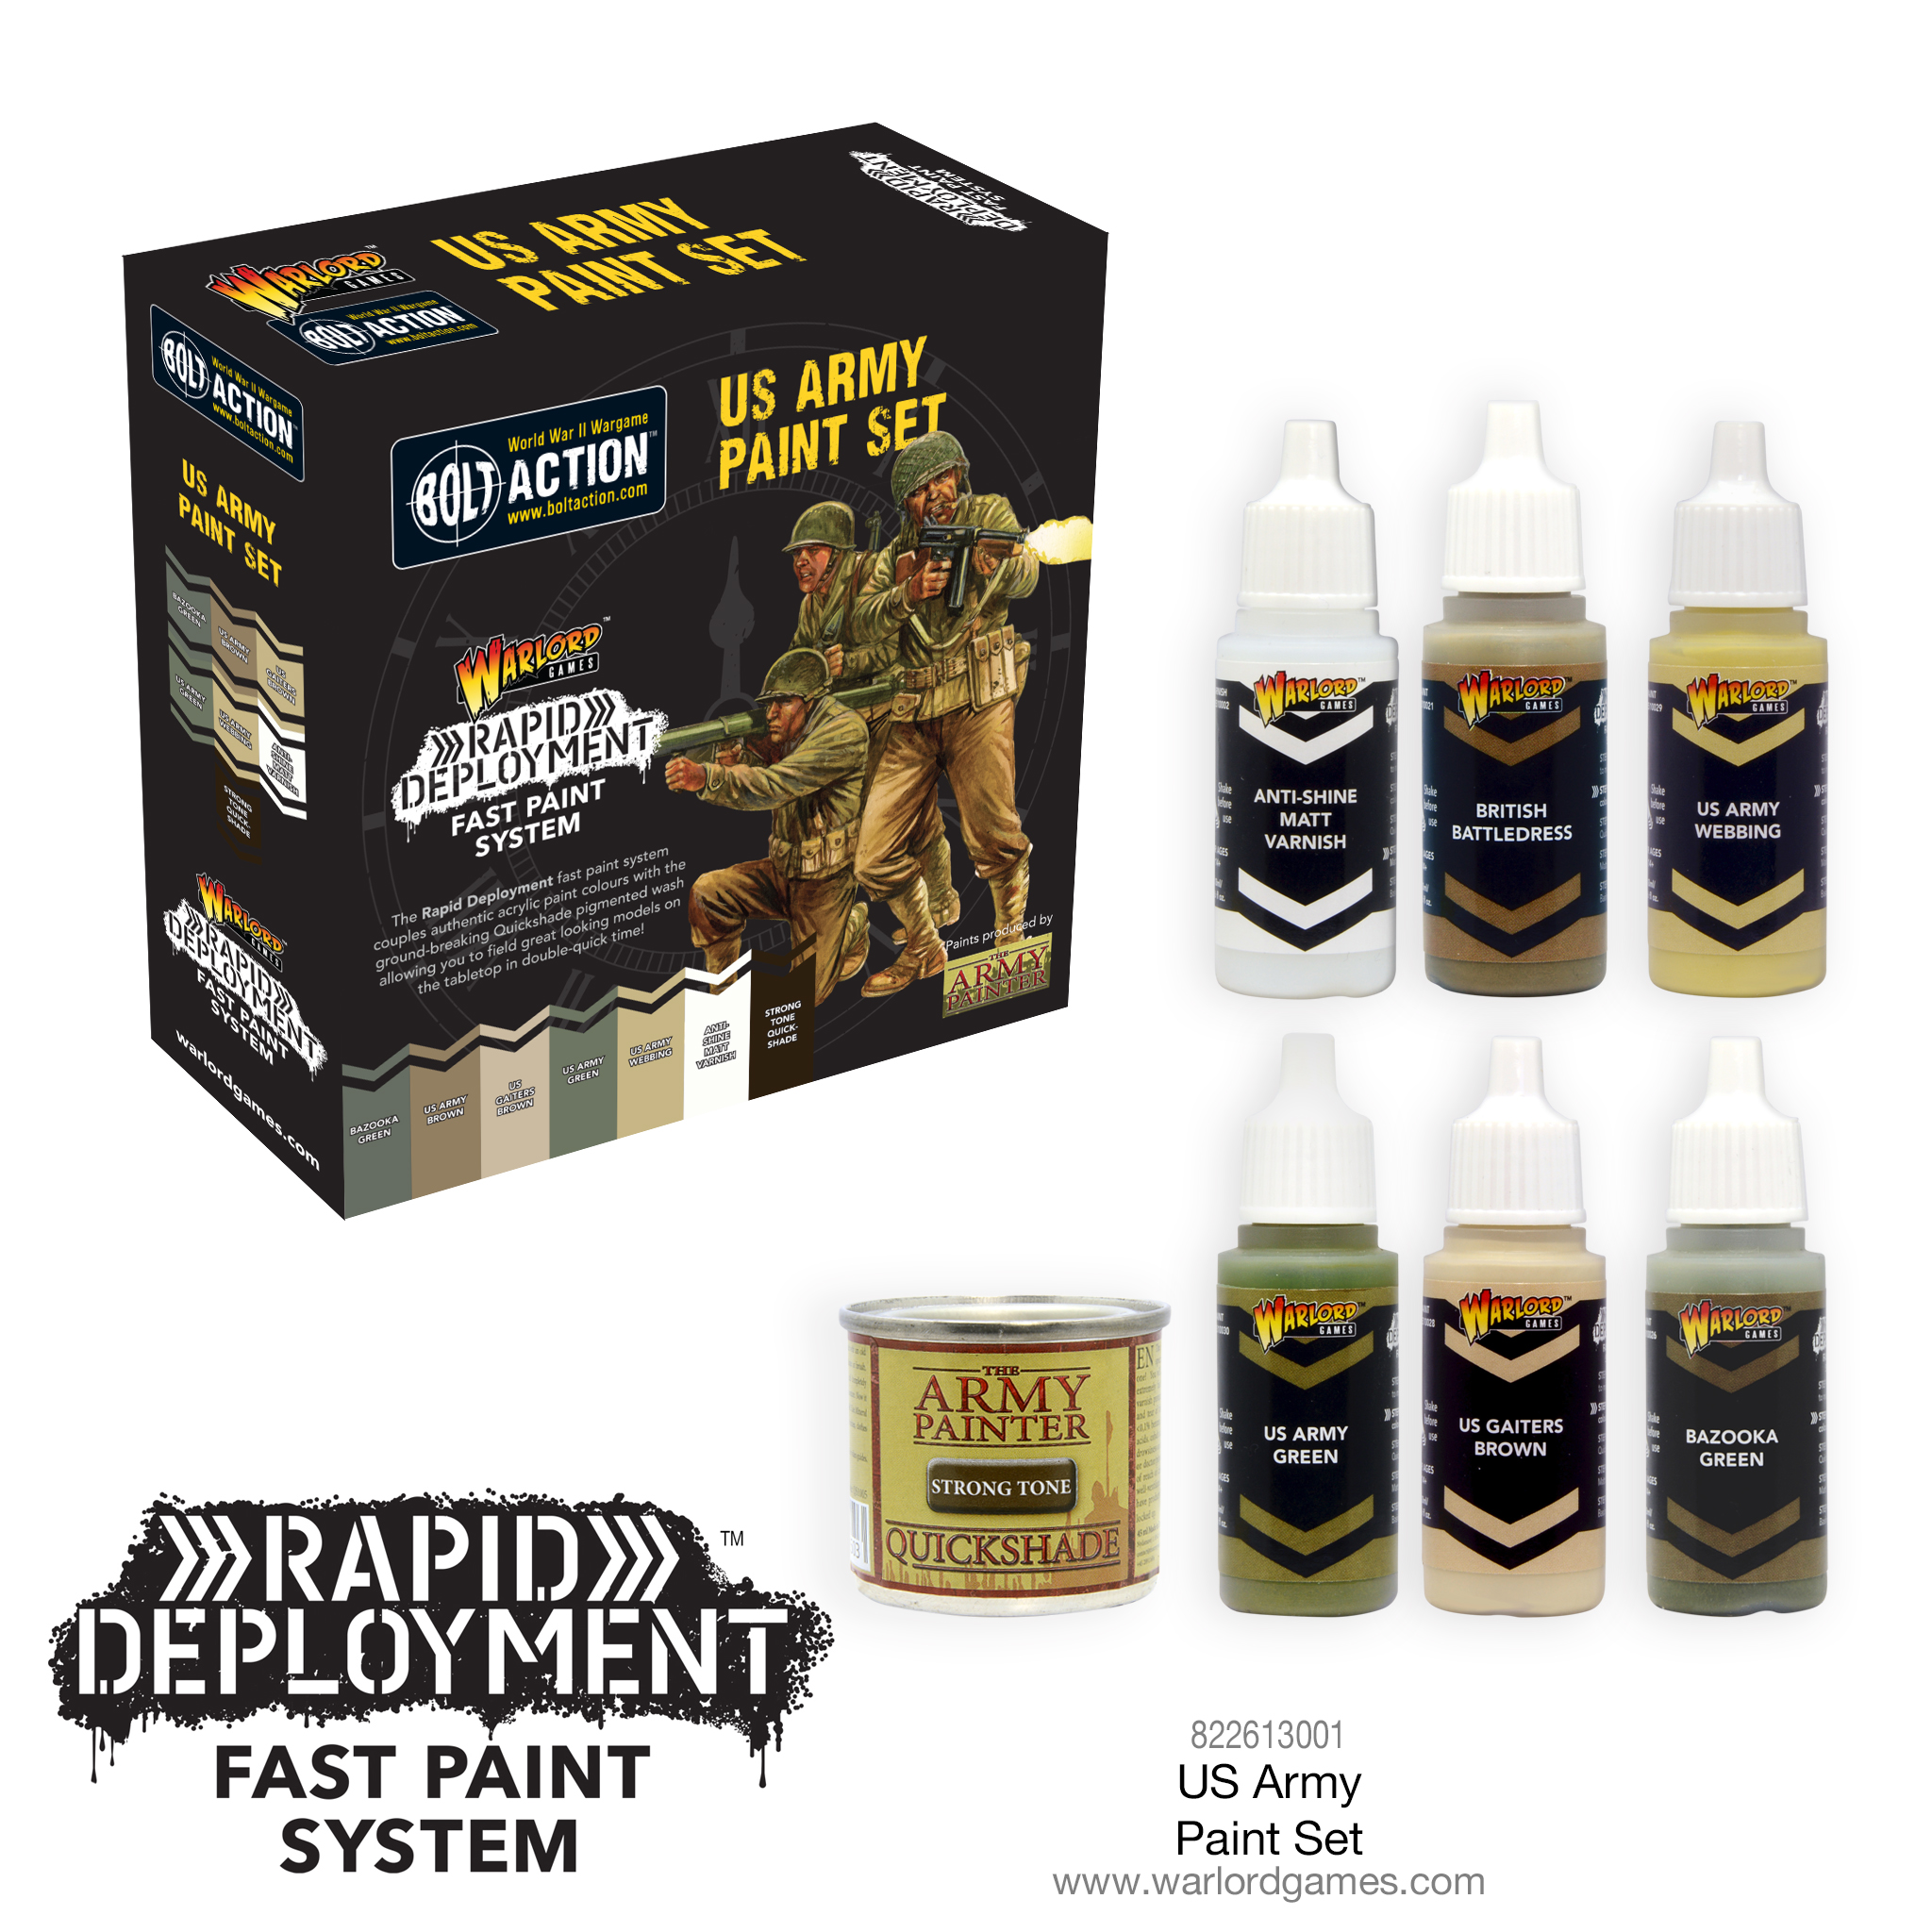 US Army Paint Set